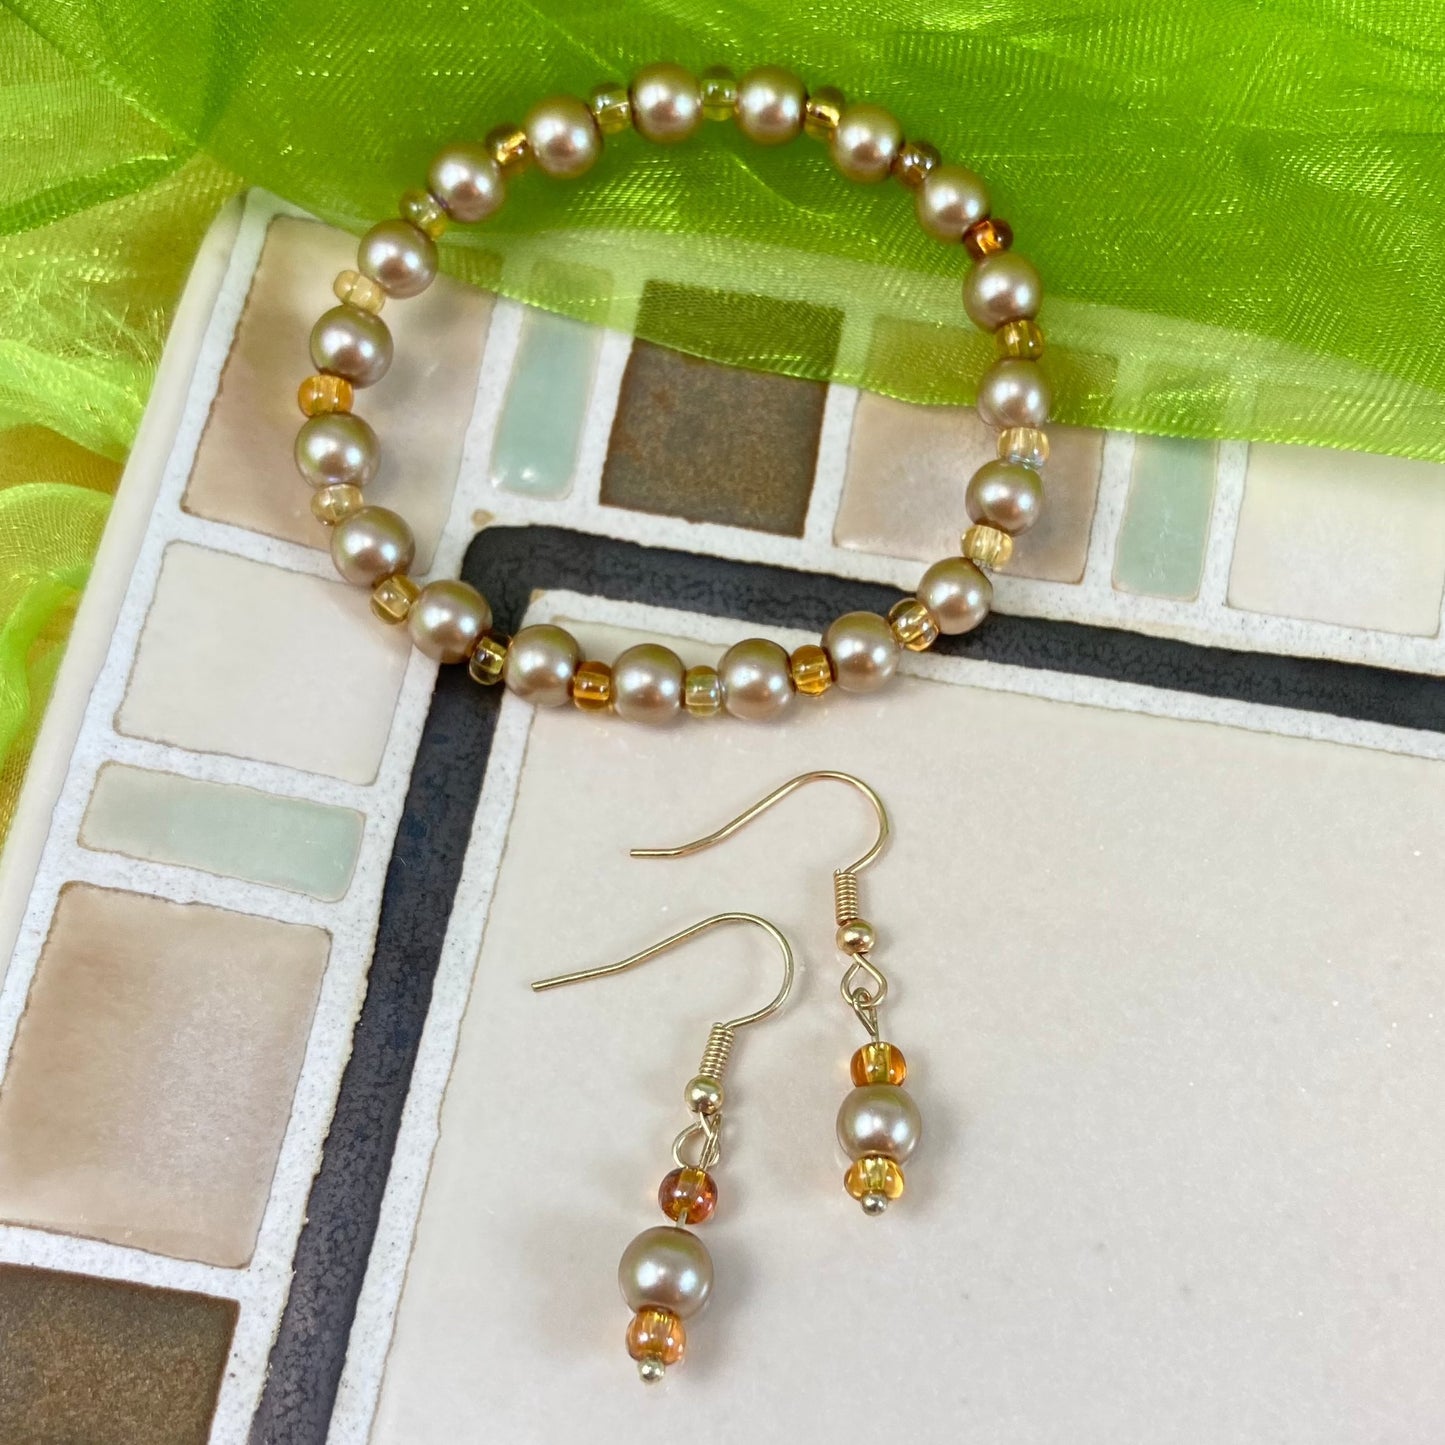 50GS - Gold & Amber Bead Bracelet and Earrings